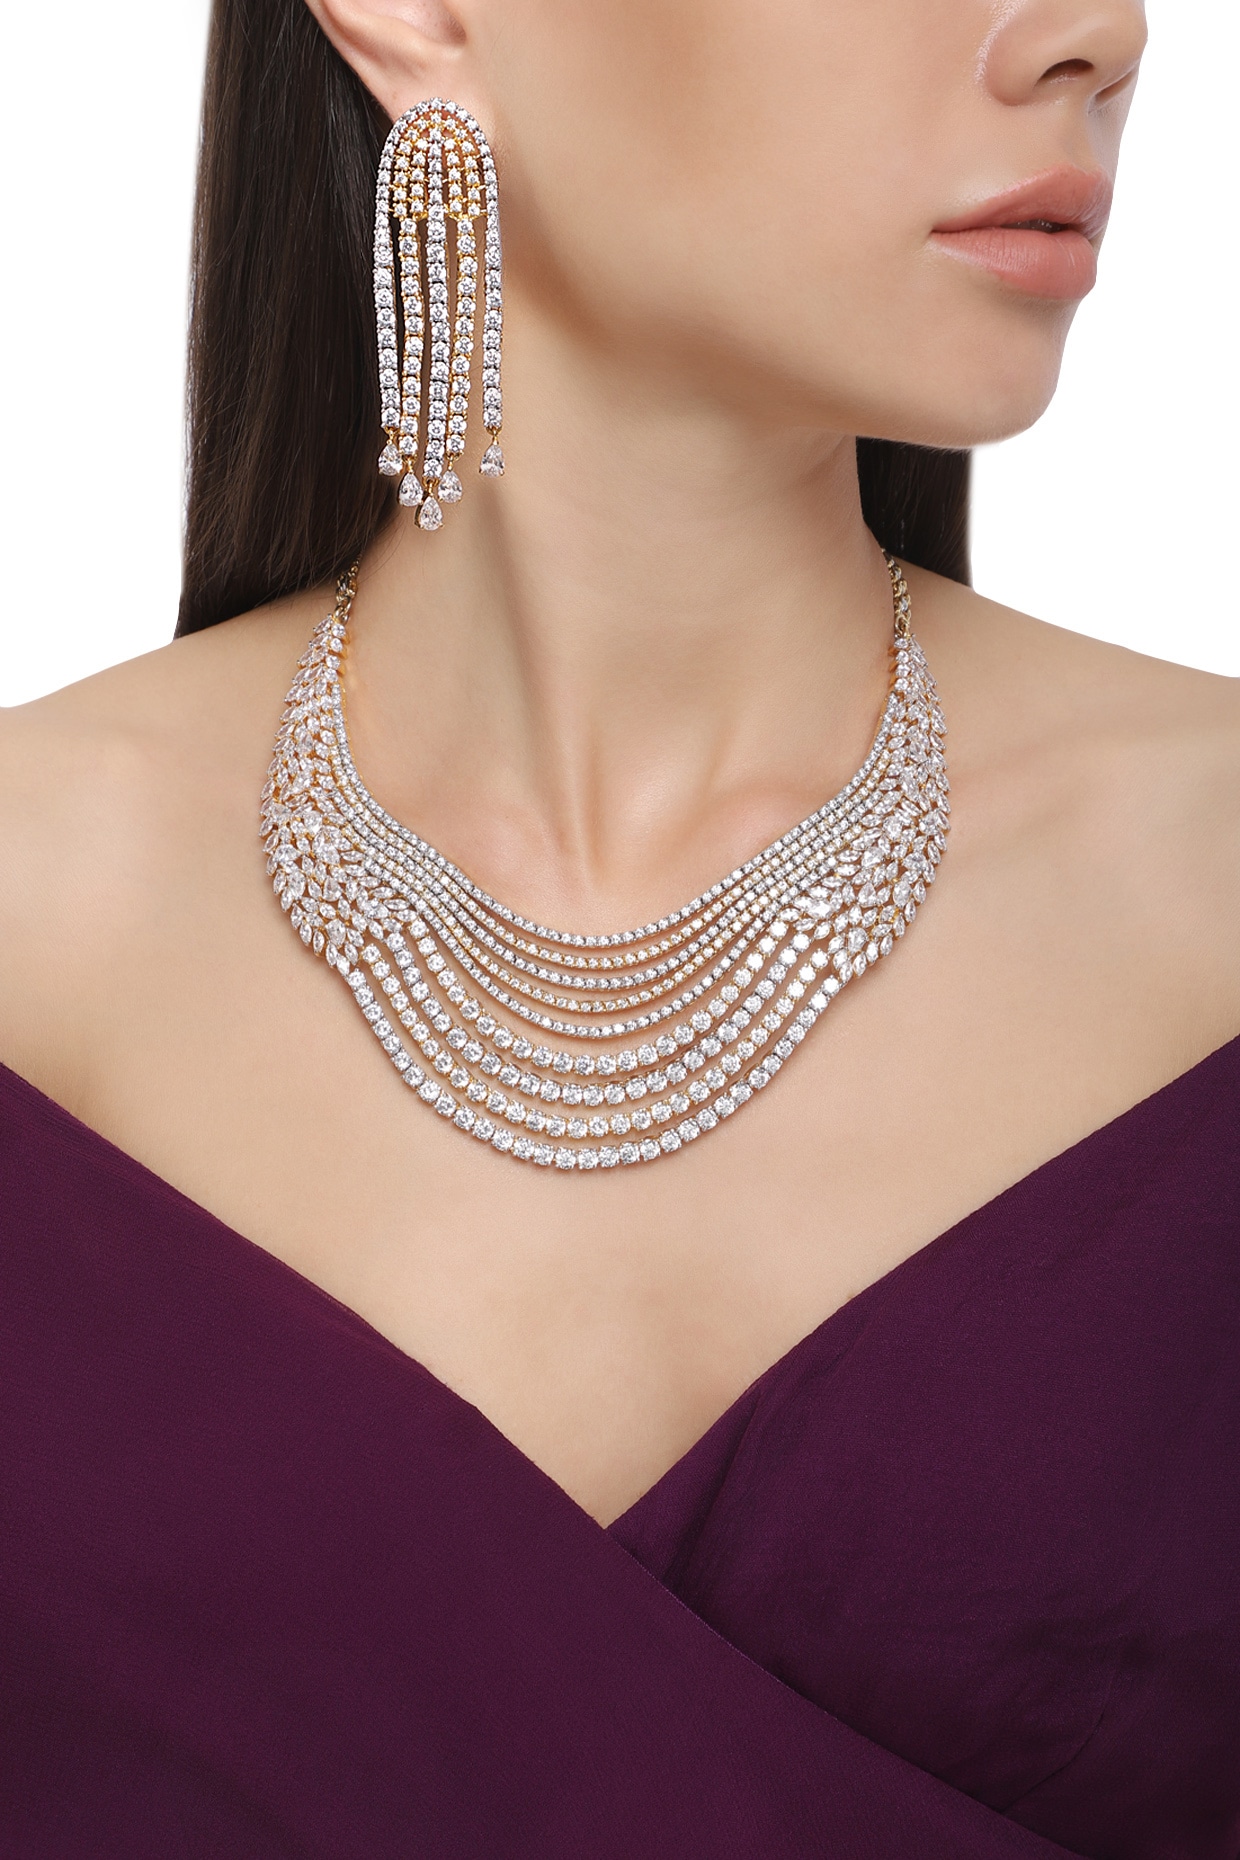 Layered Diamond Necklace 14K Rose Gold Multi Row 3 Tier Pendant Chain Round  Cut | eBay